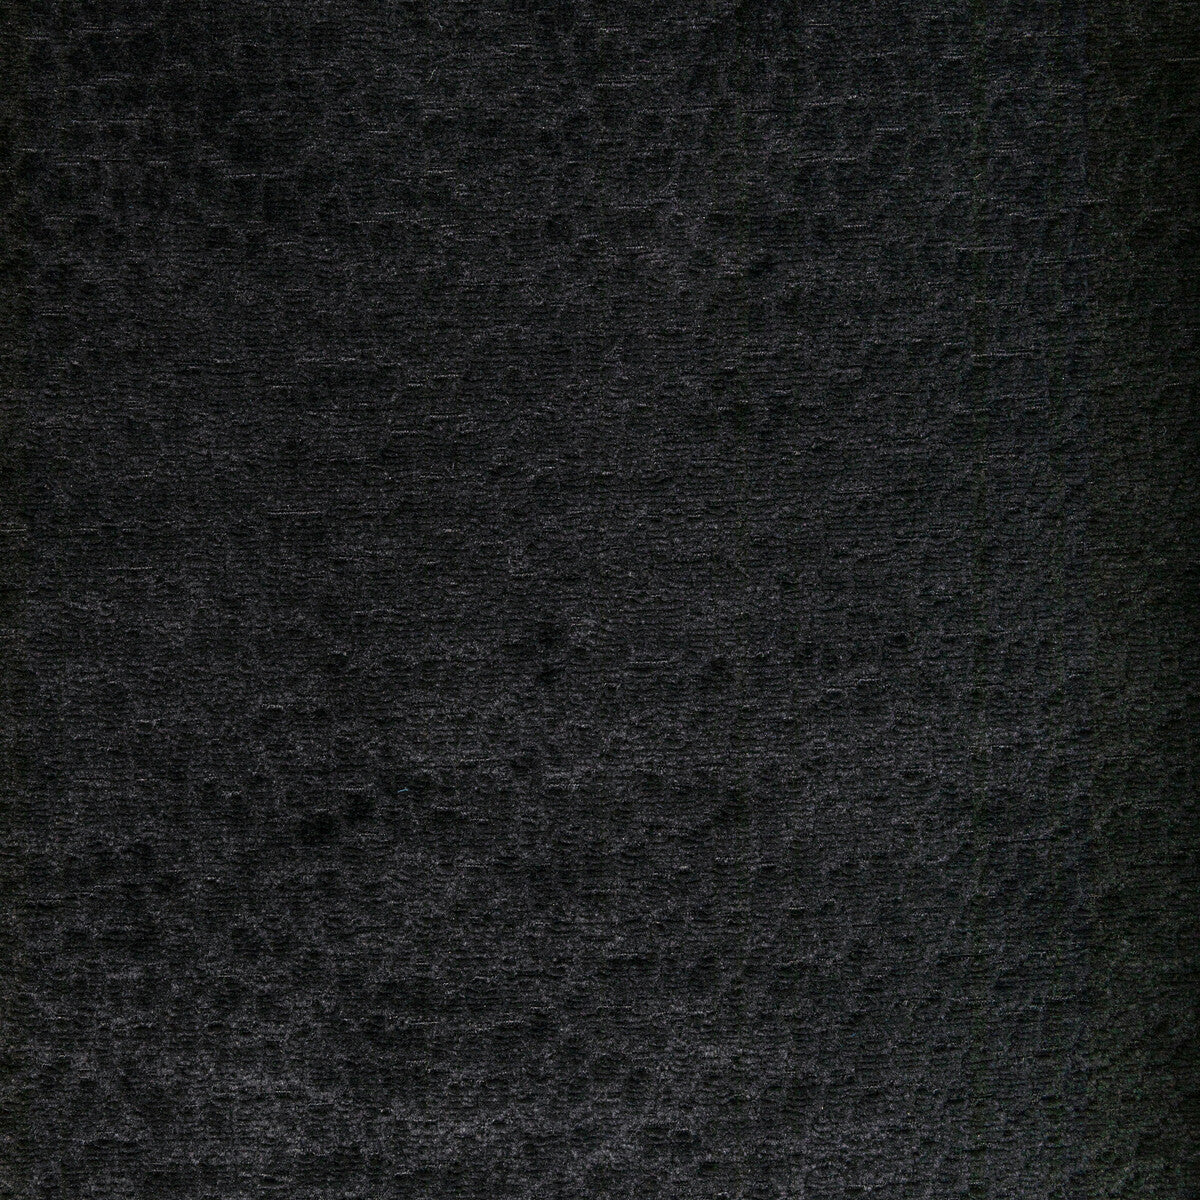 Kravet Smart fabric in 36606-8 color - pattern 36606.8.0 - by Kravet Smart in the Performance Kravetarmor collection